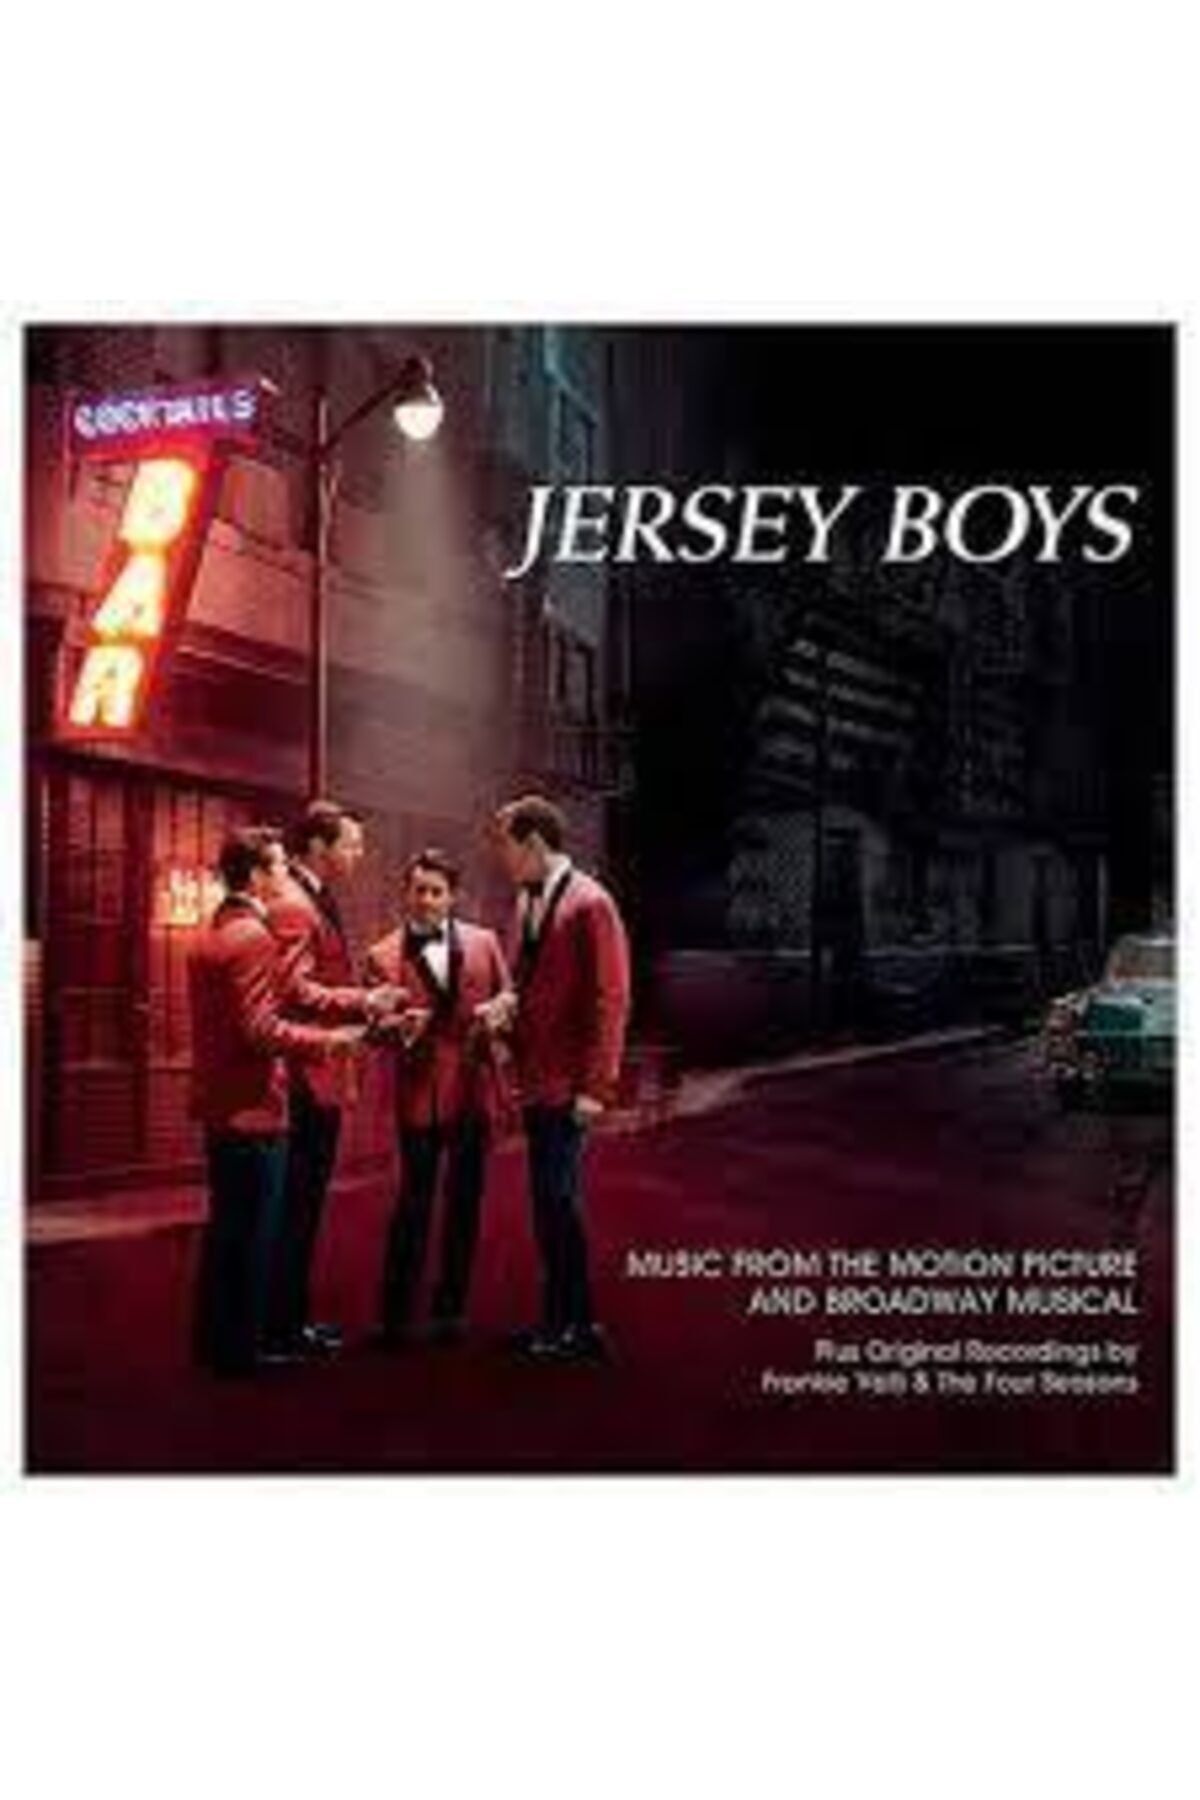 Rhino Cd - Orıgınal Soundtrack - Jersey Boys: Musıc From